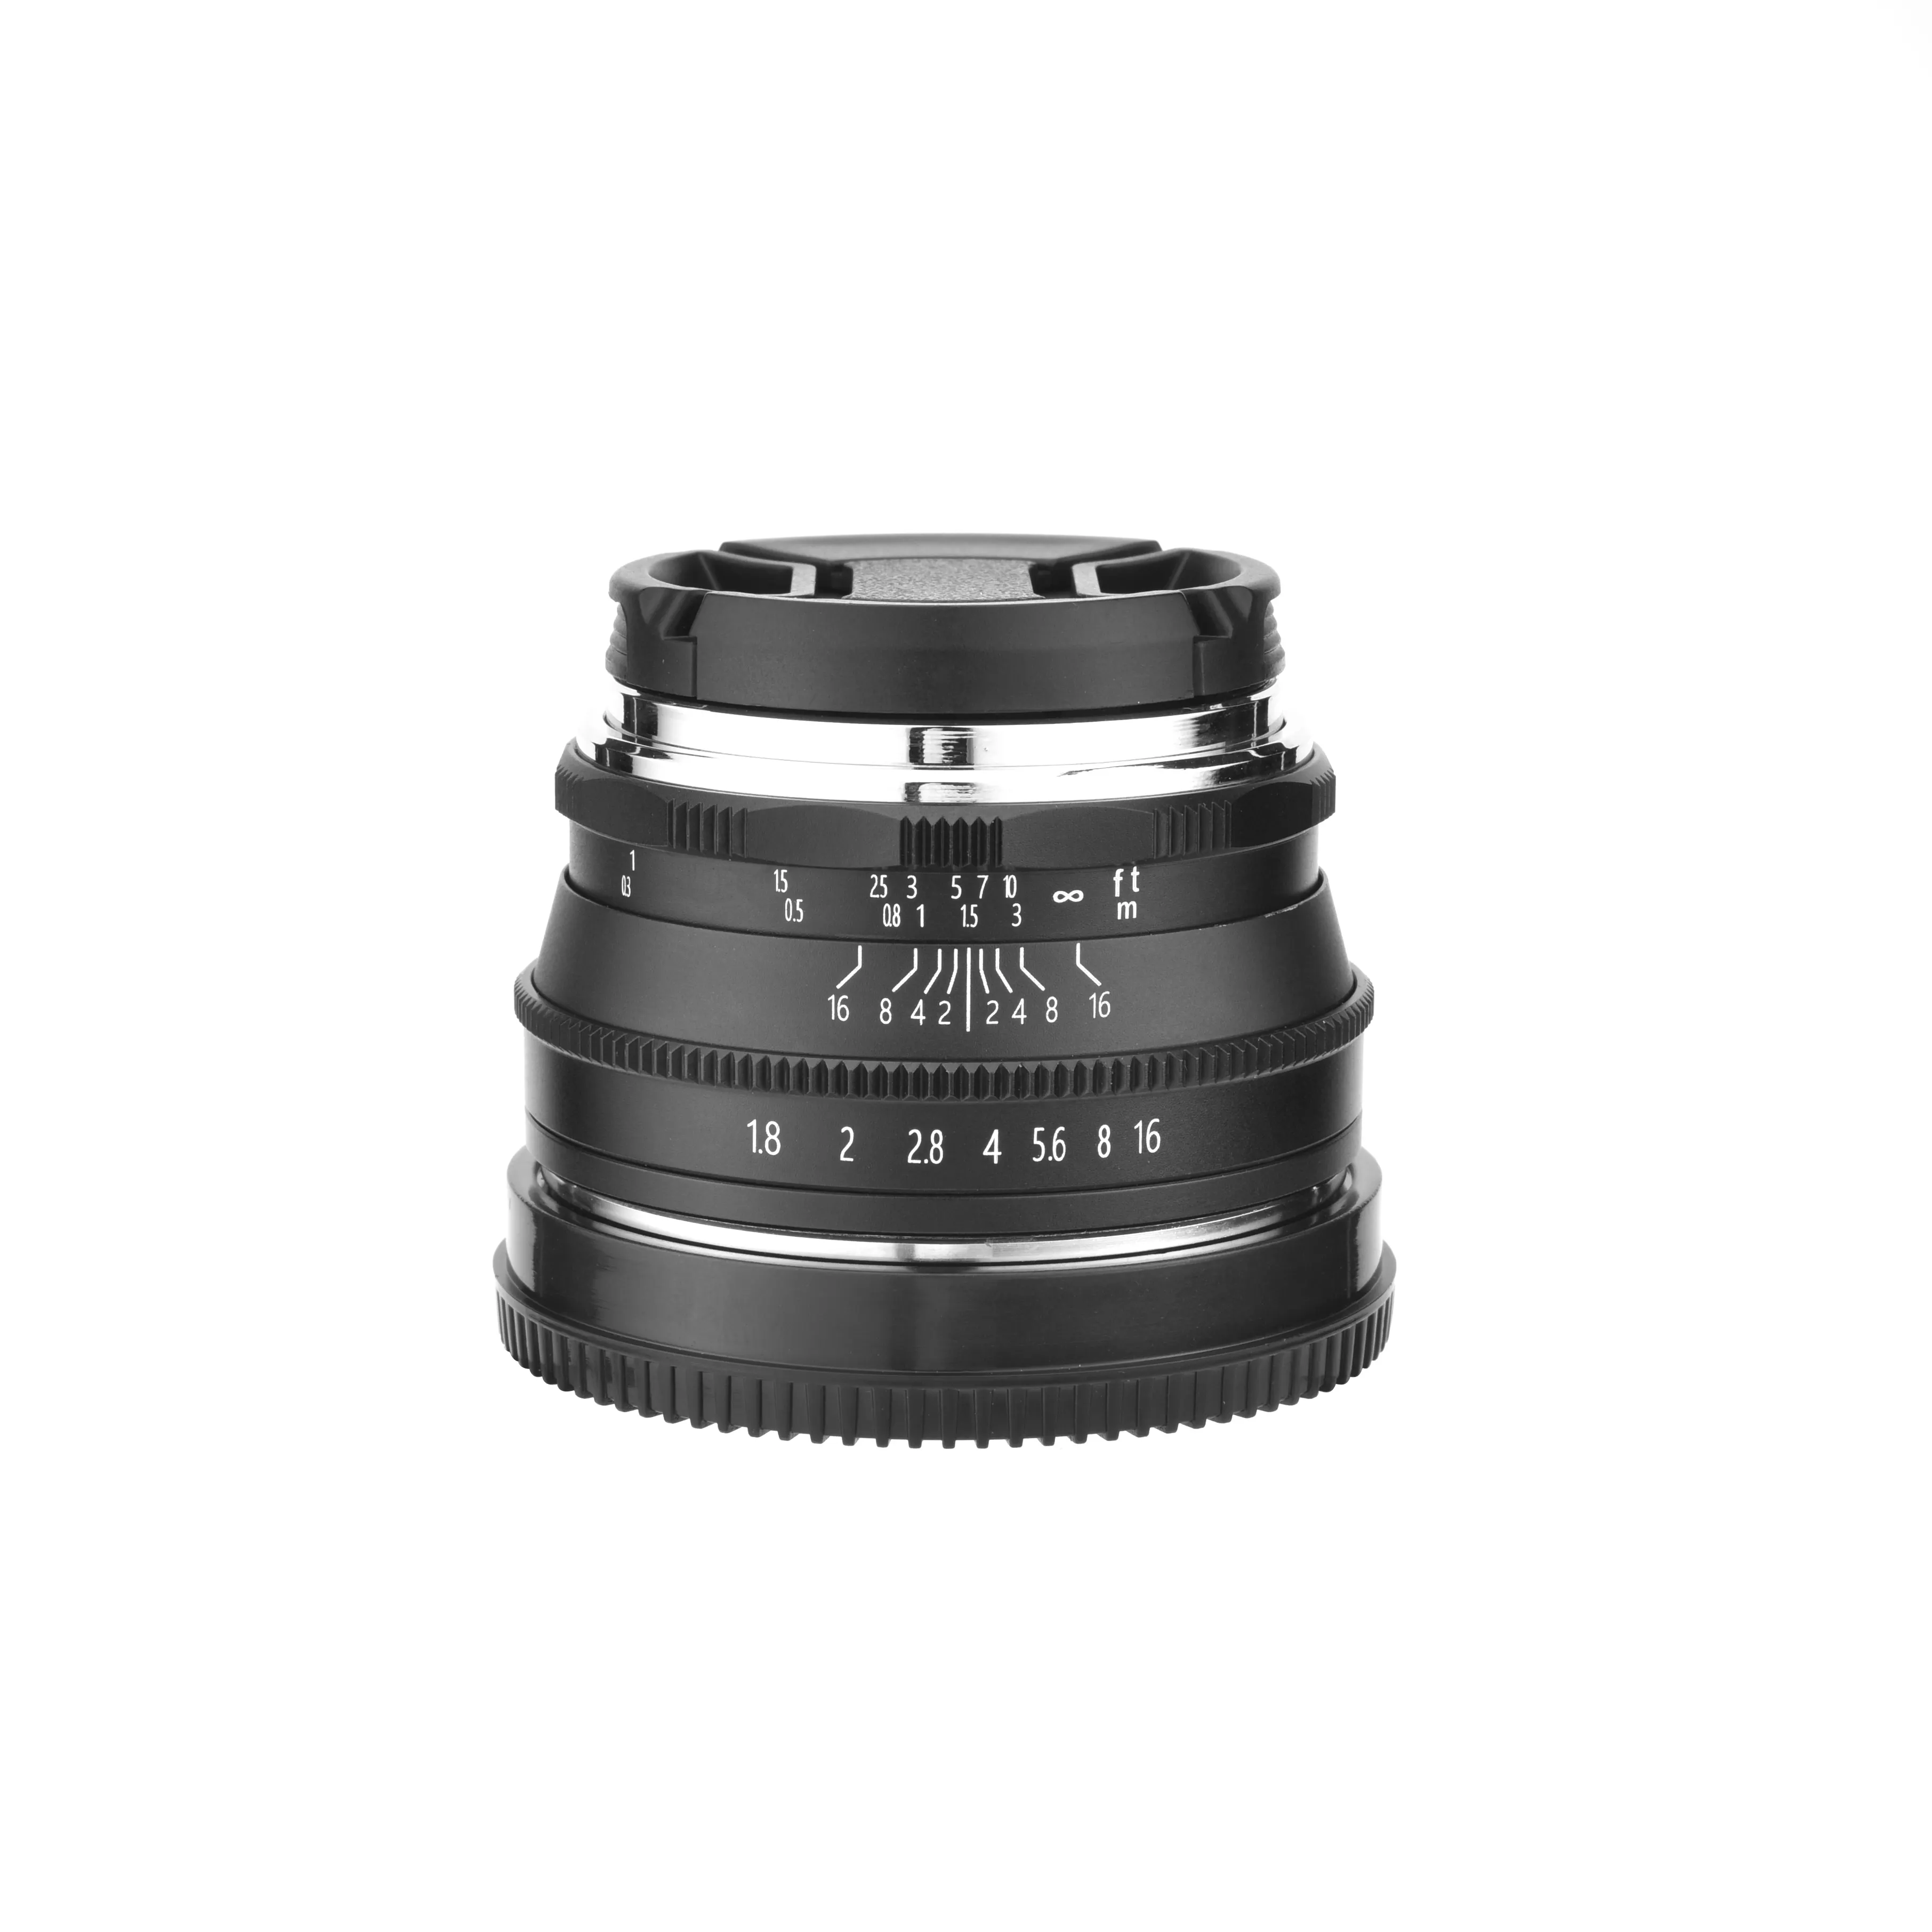 Micro Single Lens 25mm F1.8 Fixed Focus Slr Wide-Angle Camera Lens